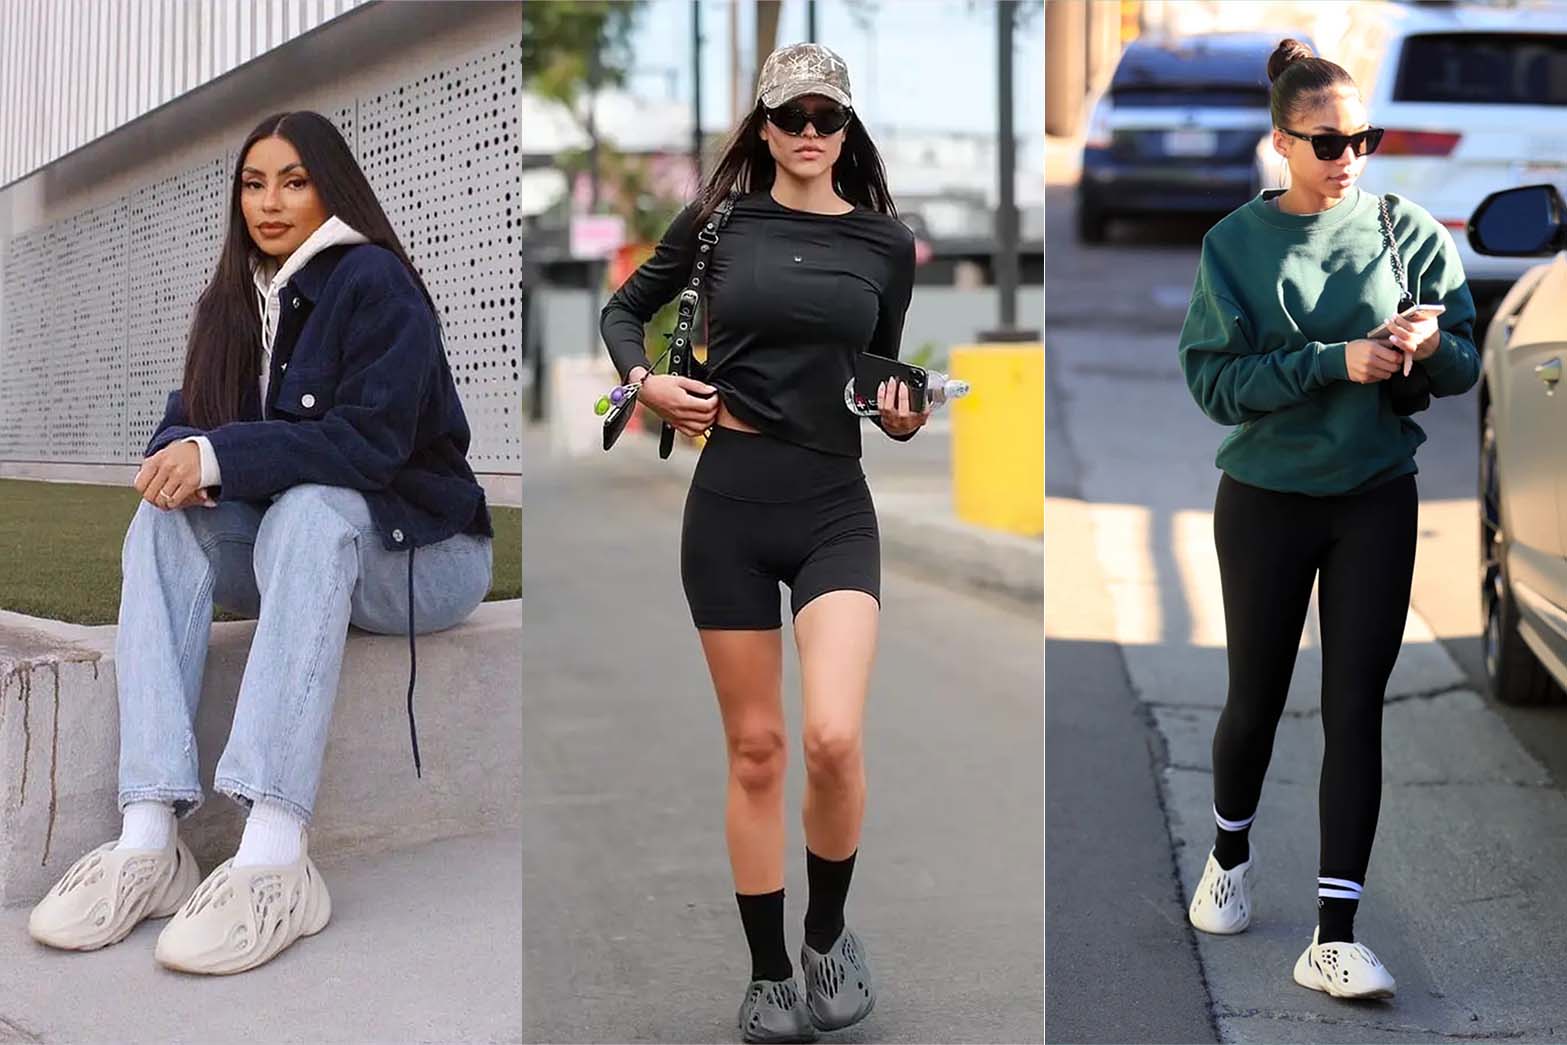 Yeezy foam runner outfit  Runners outfit, Kim kardashian hair, Biker outfit